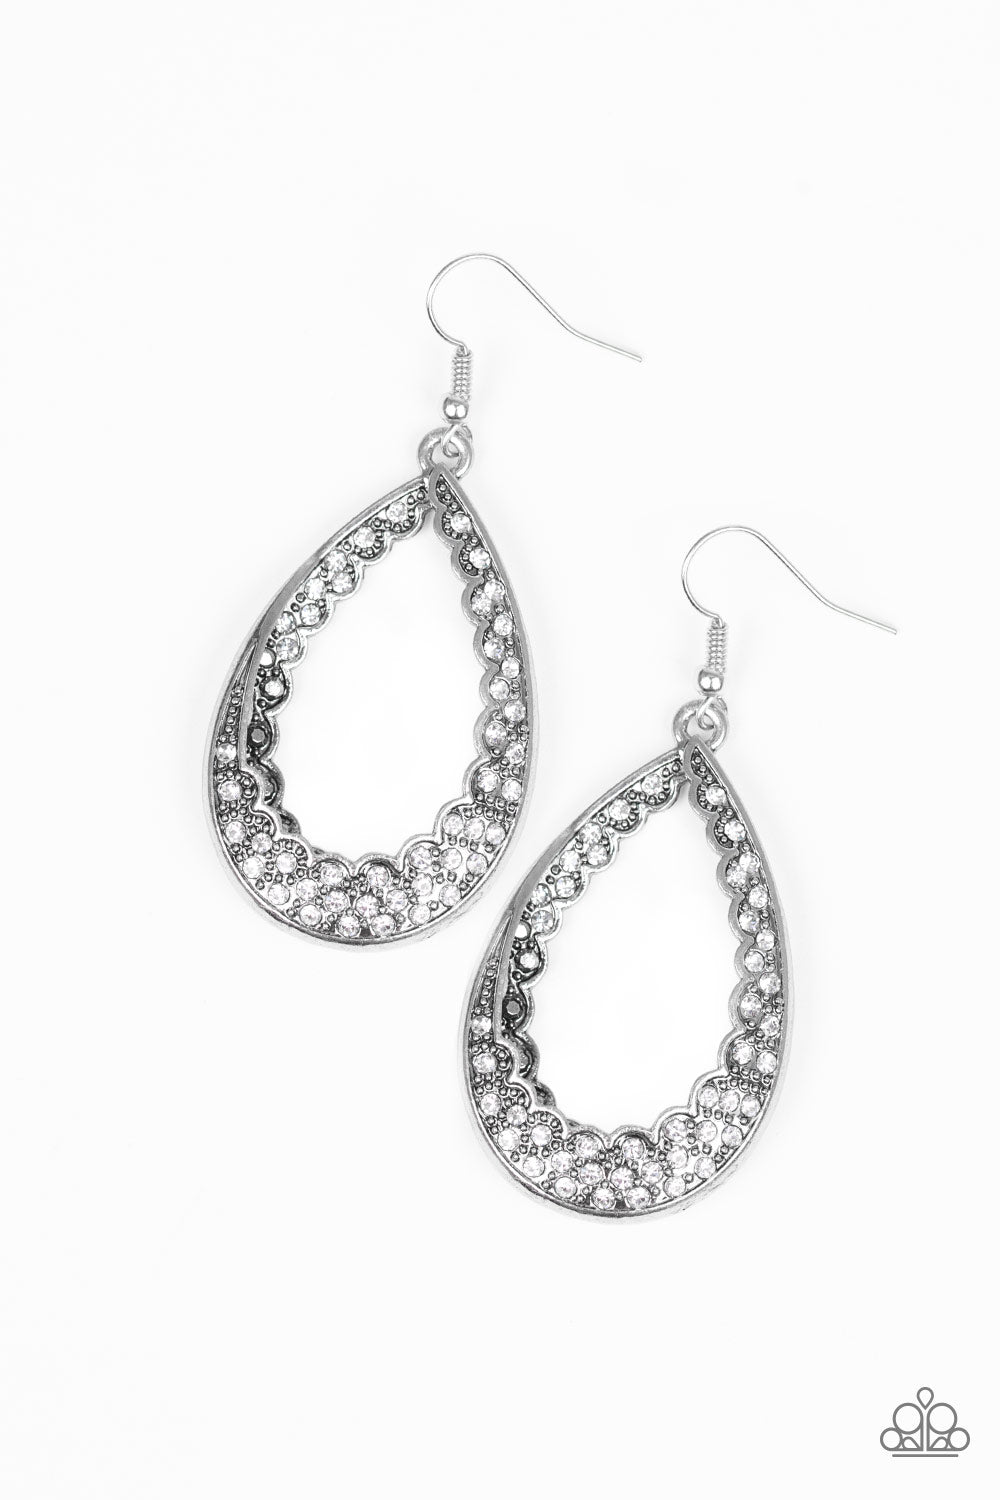 Paparazzi Royal Treatment - White Rhinestones - Earrings - $5 Jewelry With Ashley Swint